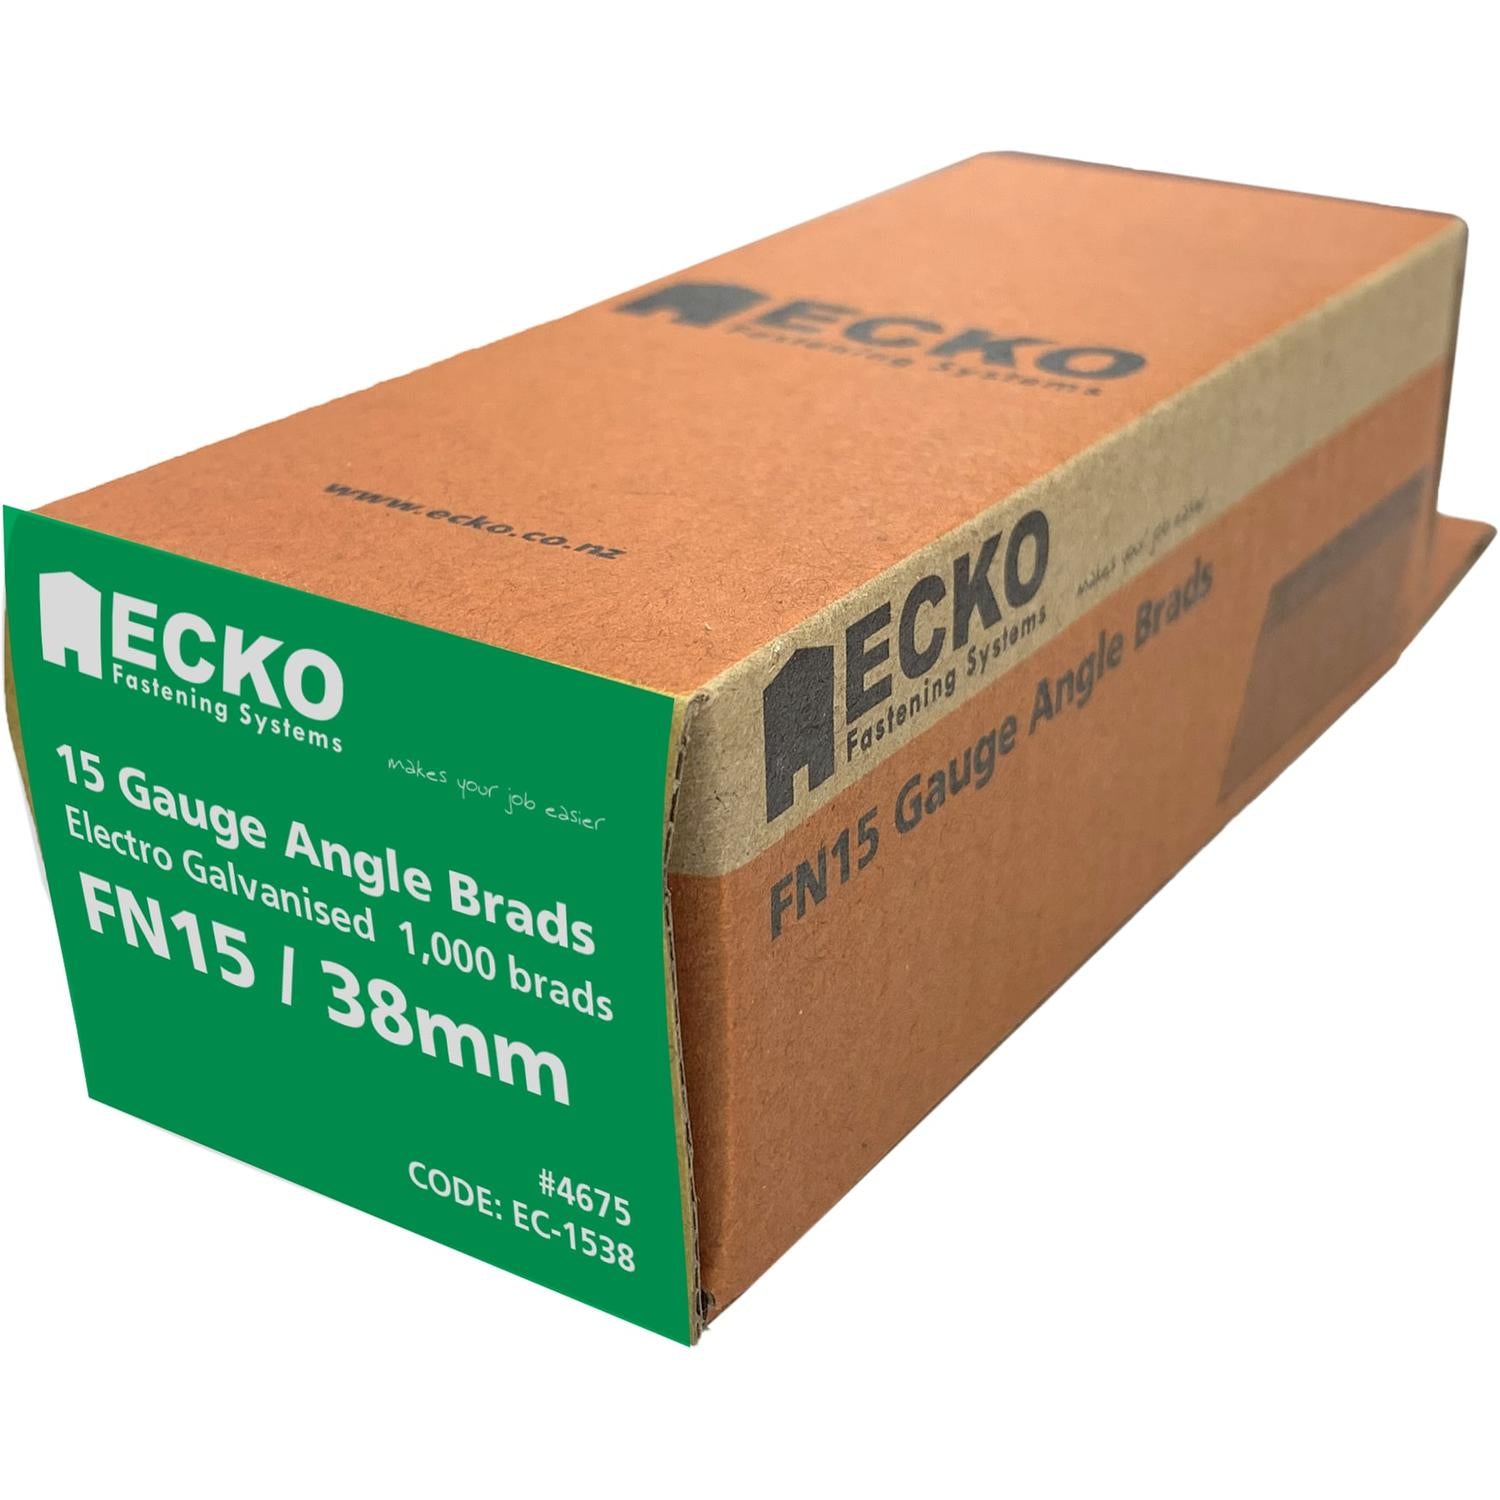 Ecko 15G X 38Mm Angle Brads Electro Galvanised (1000 Box)